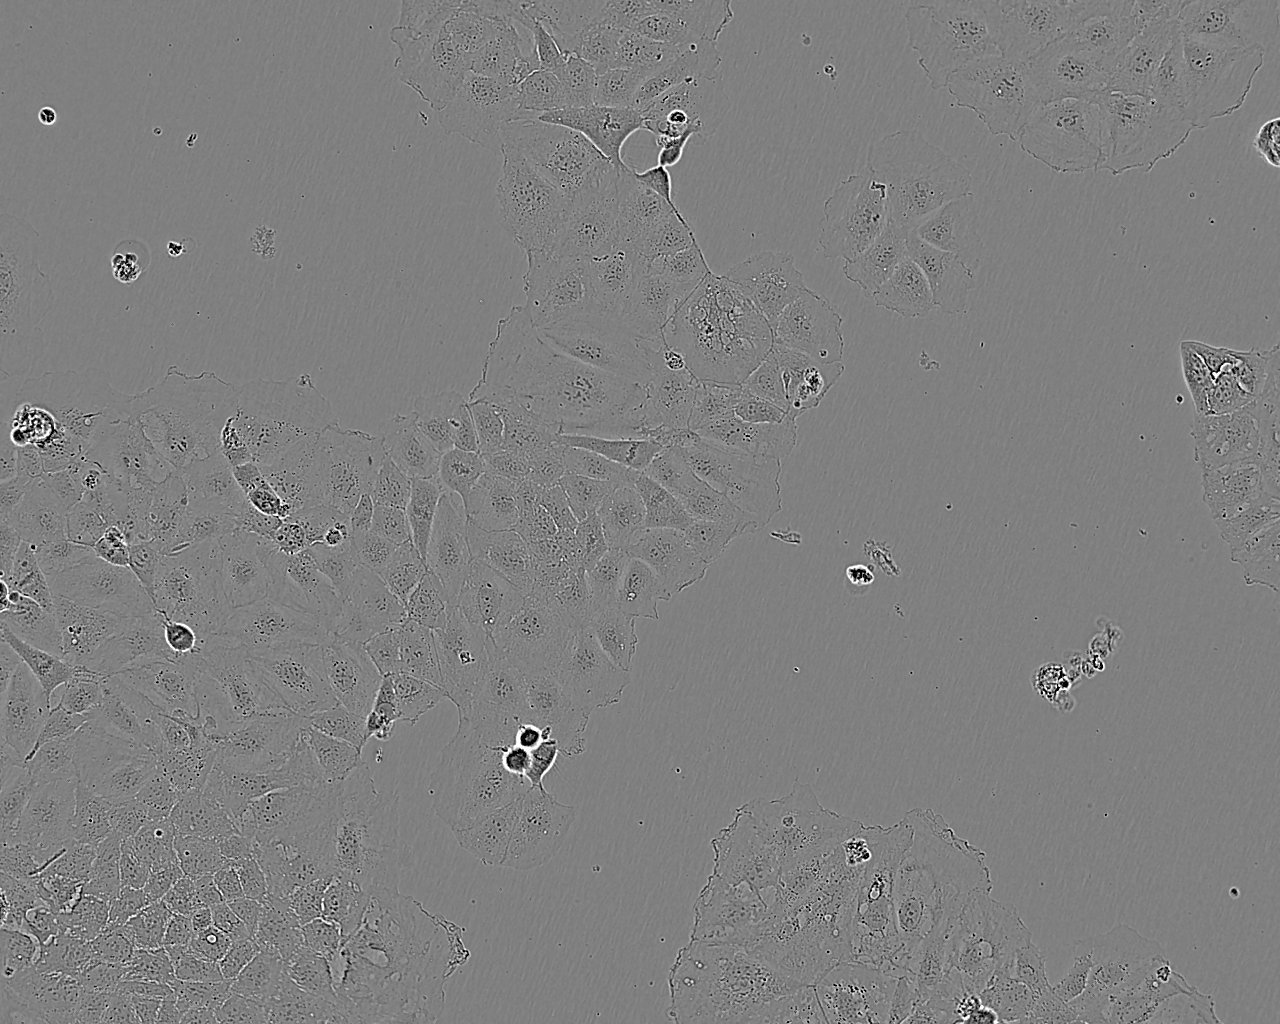 Hs 578Bst epithelioid cells人正常乳腺细胞系,Hs 578Bst epithelioid cells